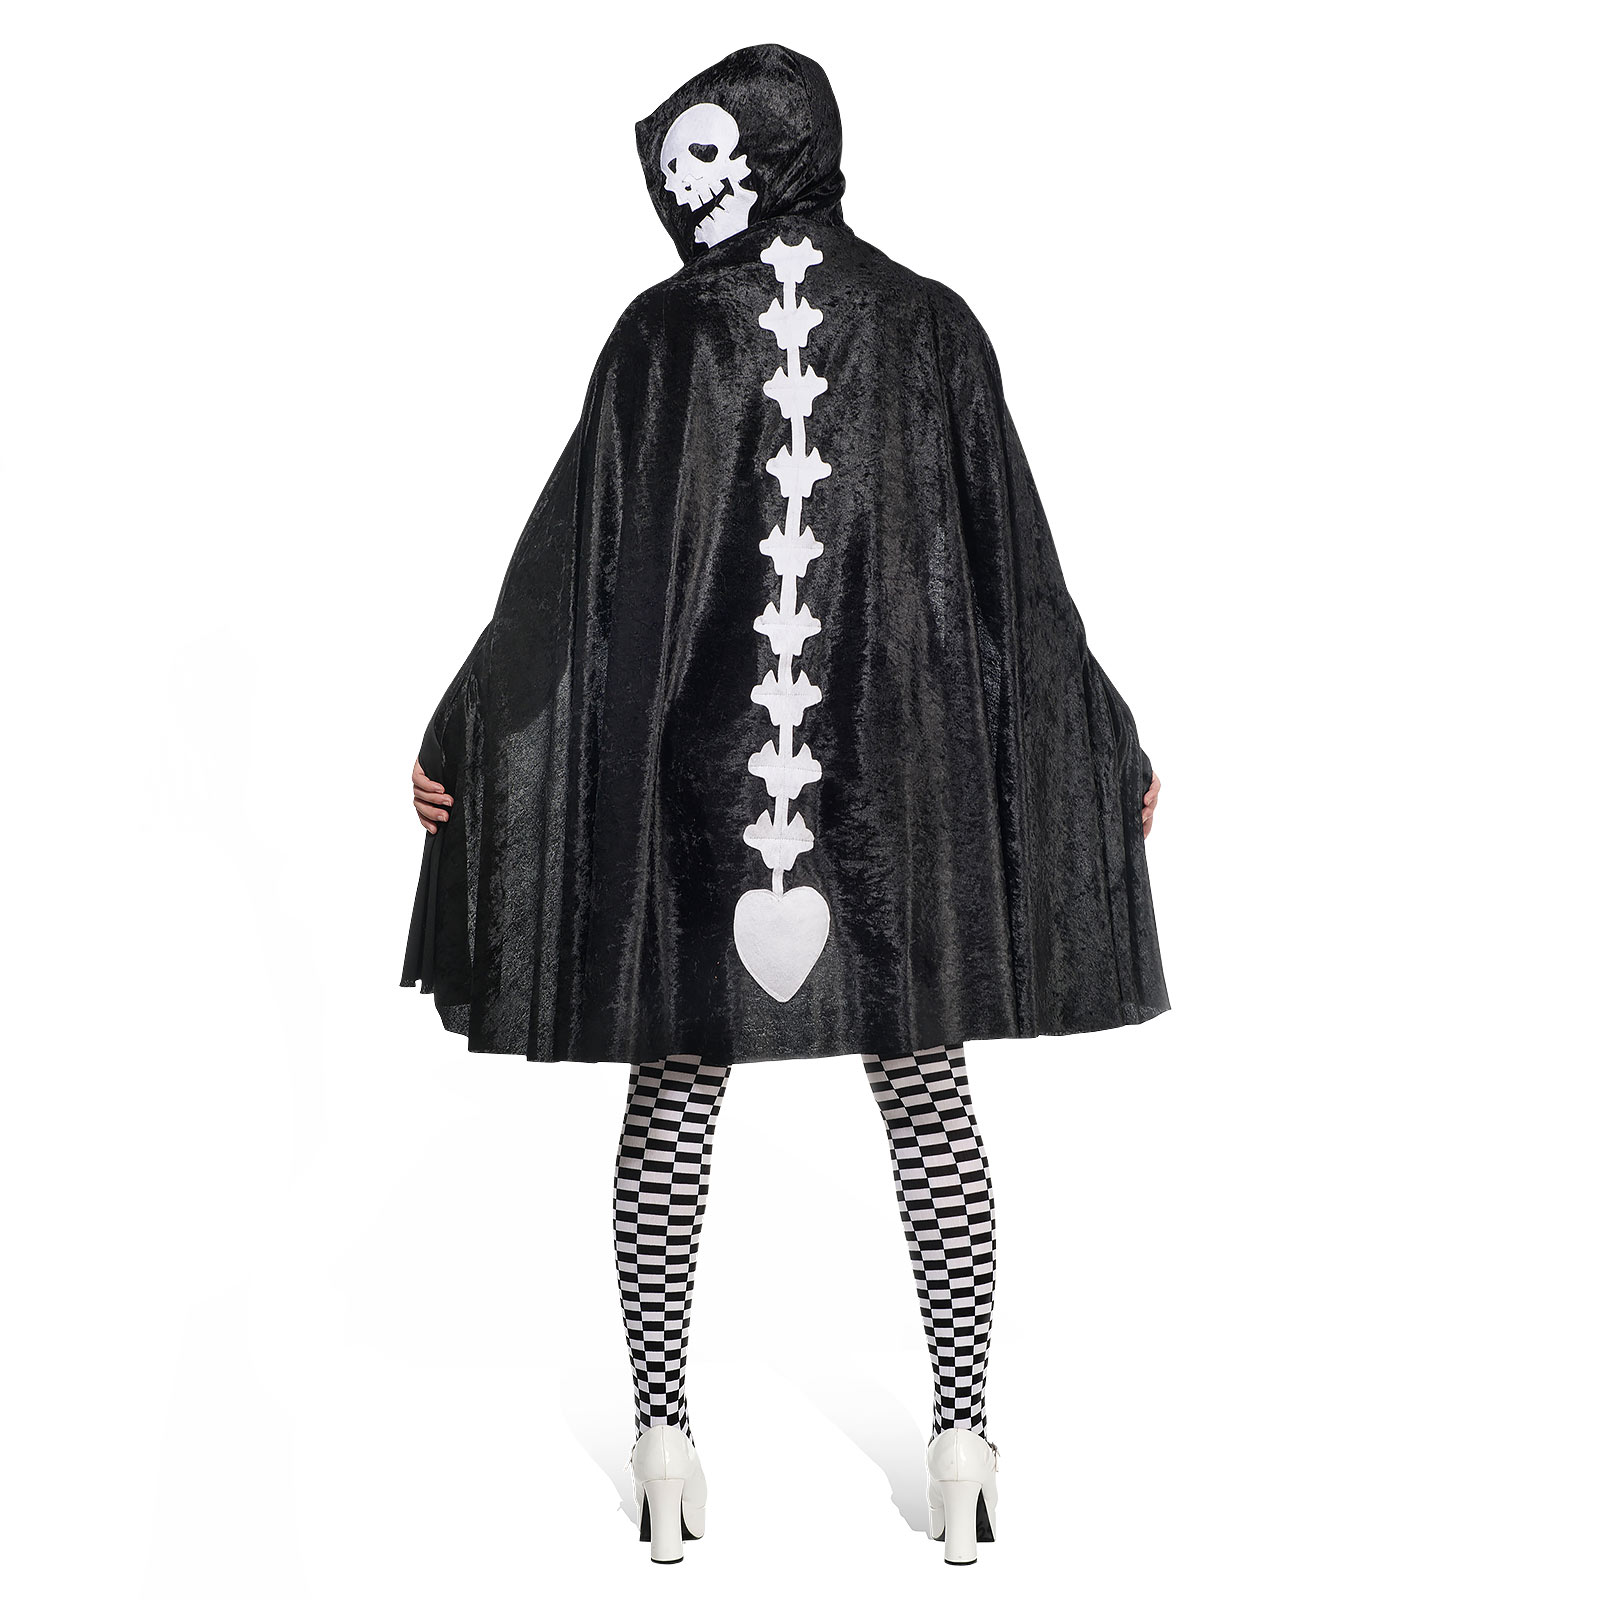 Skeleton Cape - Costume Cloak Women